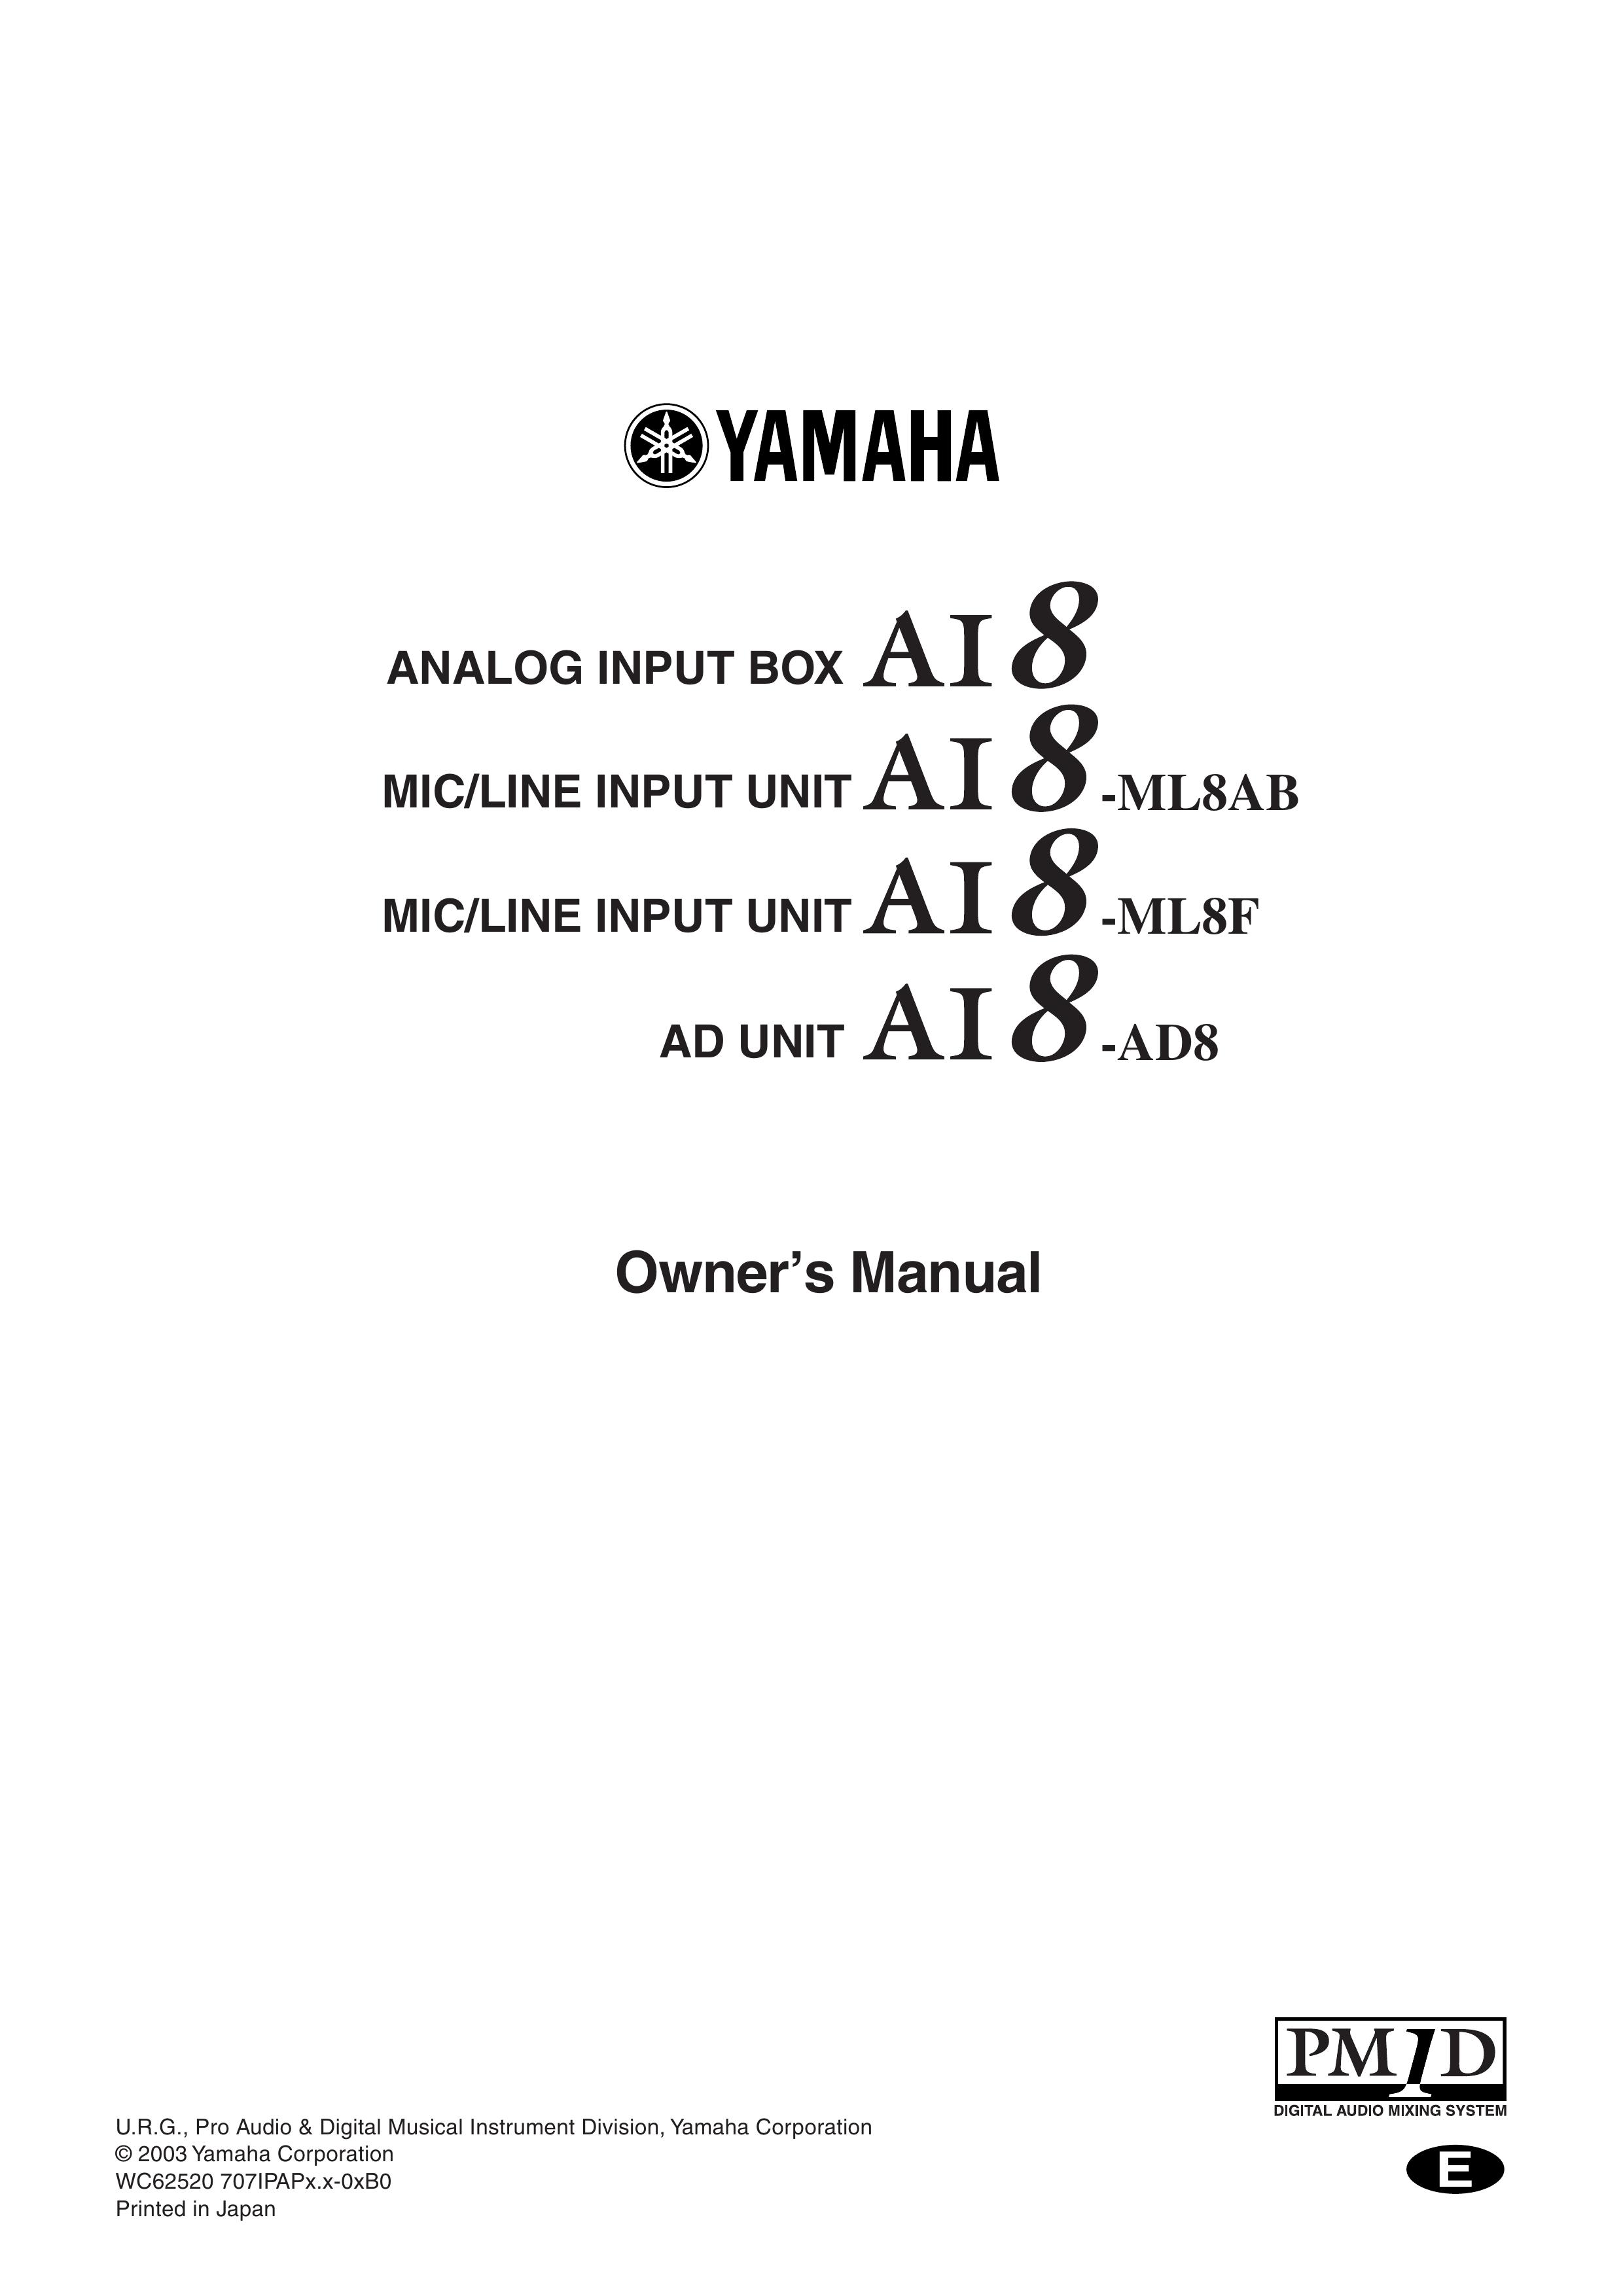 Yamaha AD8 Musical Instrument User Manual